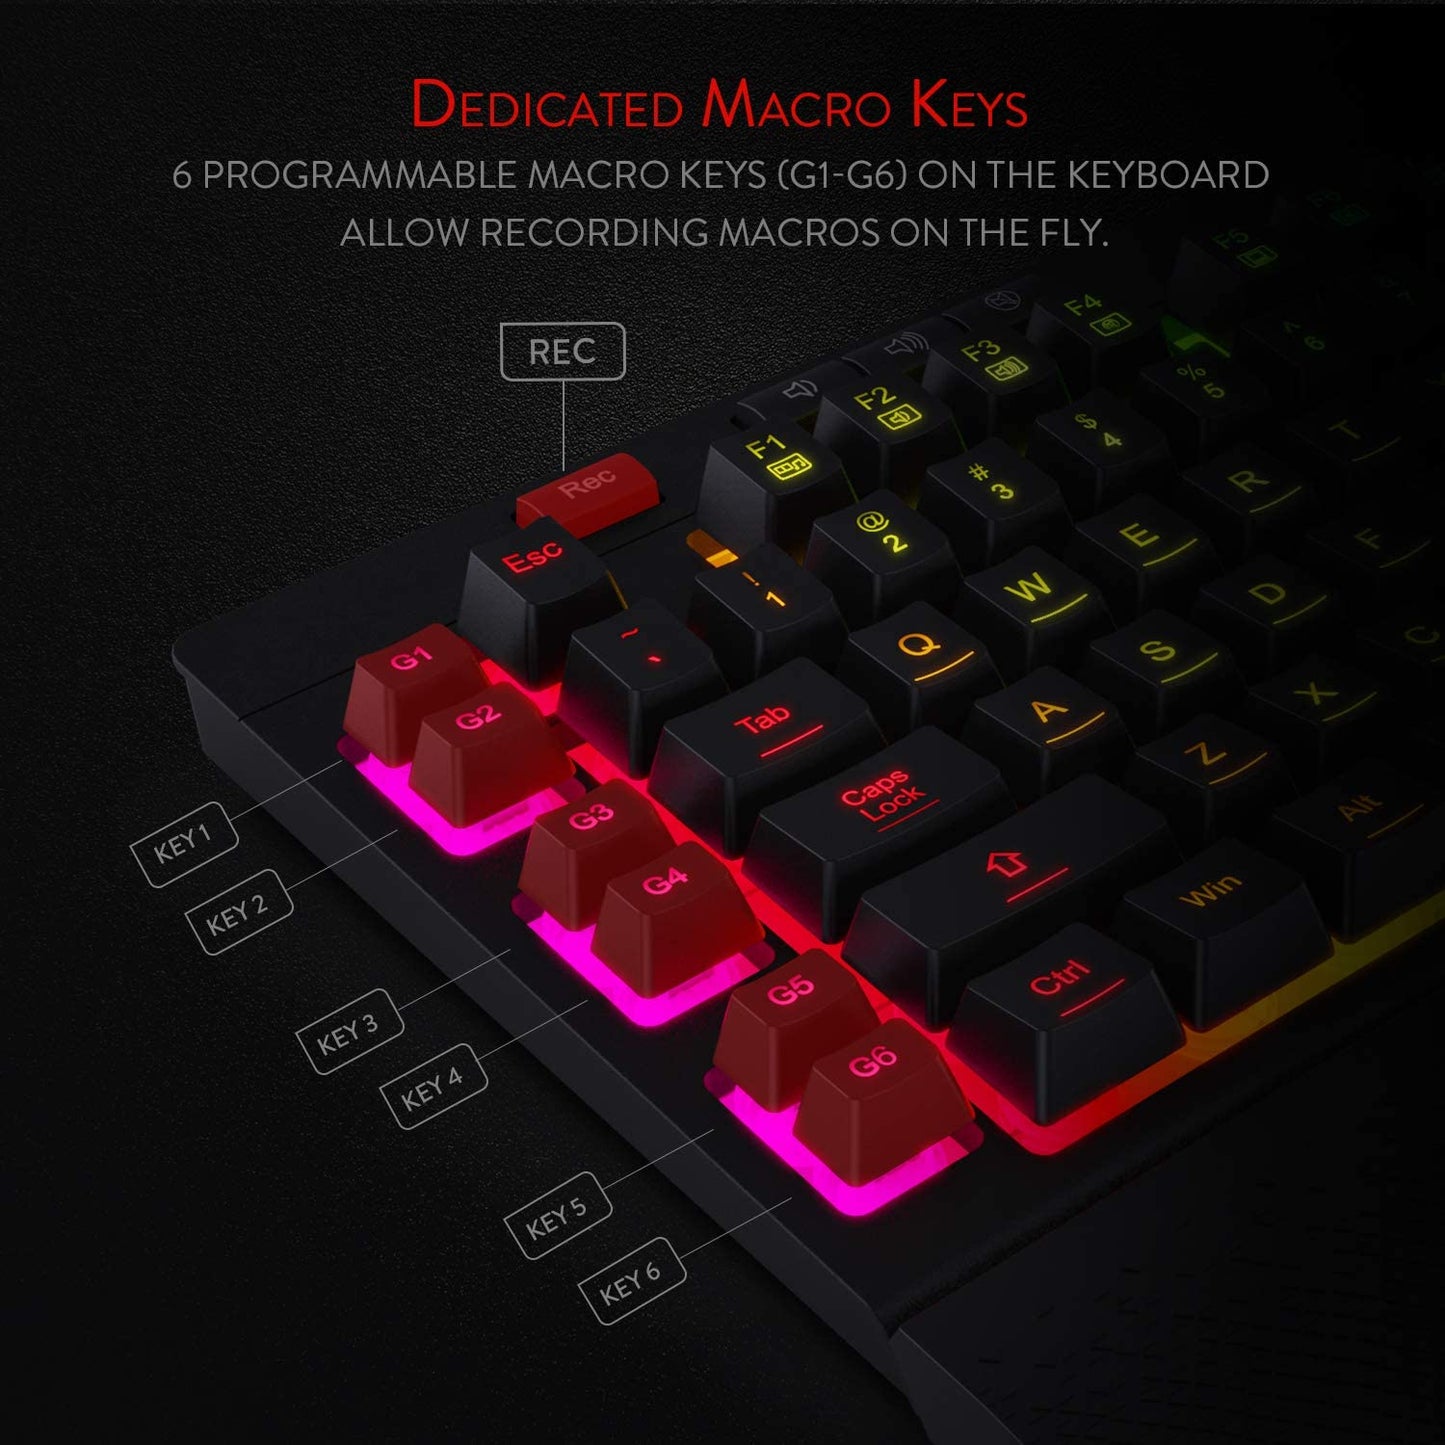 Redragon K512 Shiva RGB Gaming Keyboard with Multimedia Keys, 6 Extra On-Board Macro Keys, Dedicated Media Control, Detachable Wrist Rest (Black)